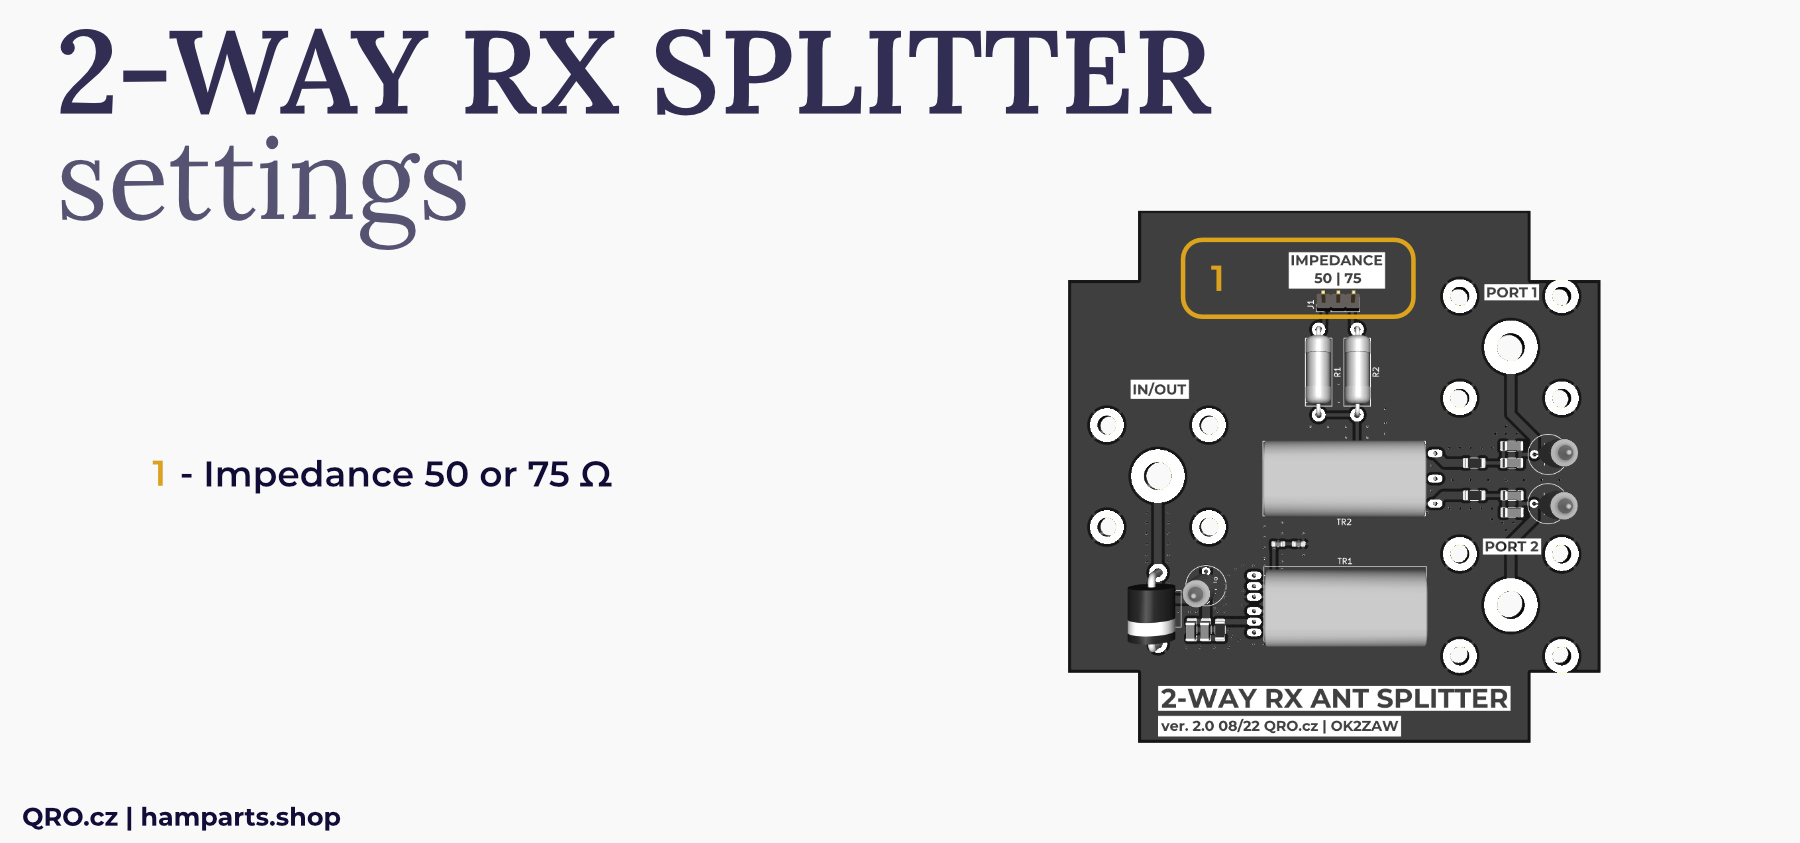 2way splitter jumper settings classic box